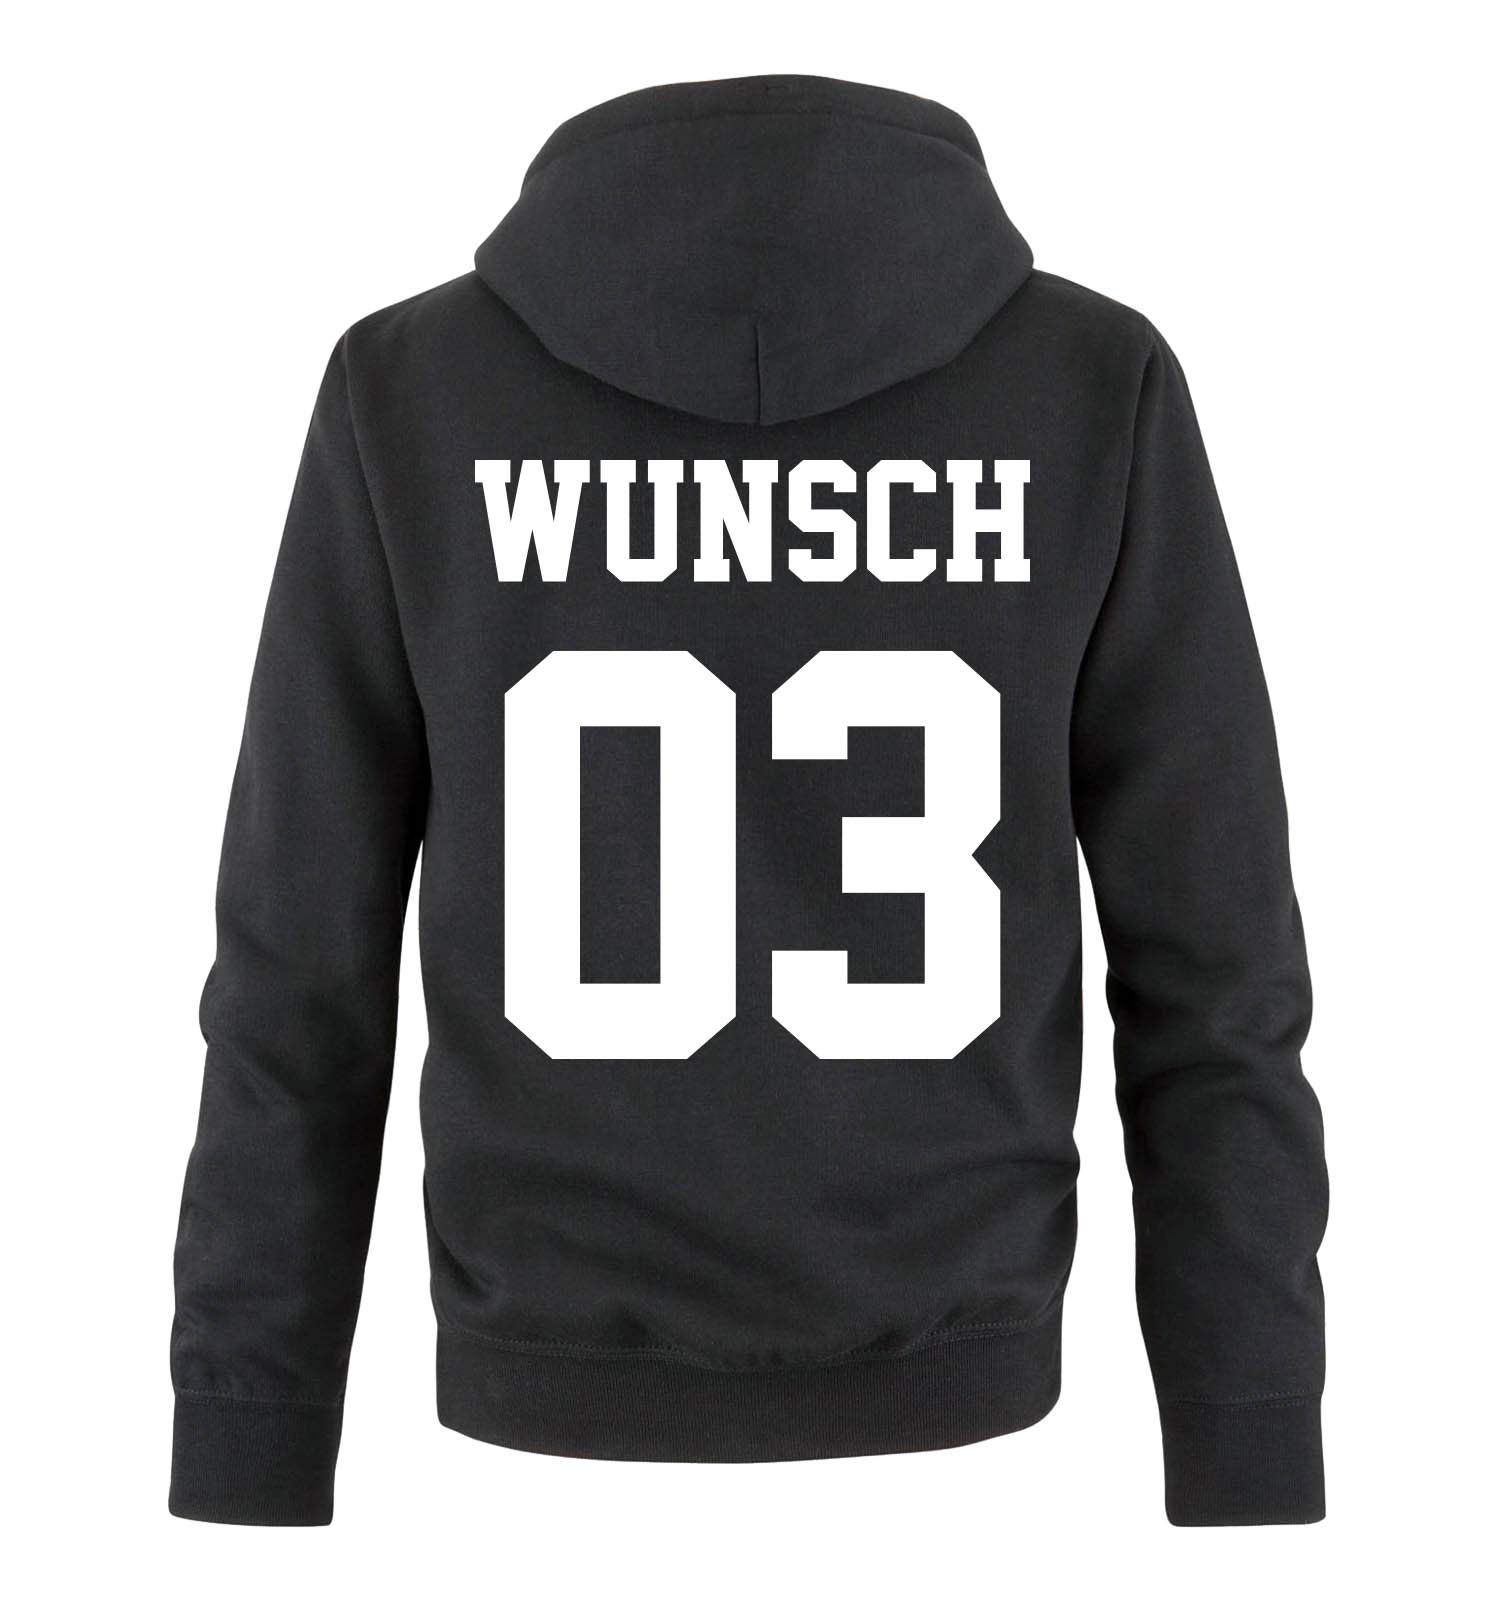 Comedy Shirts - Wunsch - Herren Hoodie - Schwarz/Weiss - Gr. 4XL